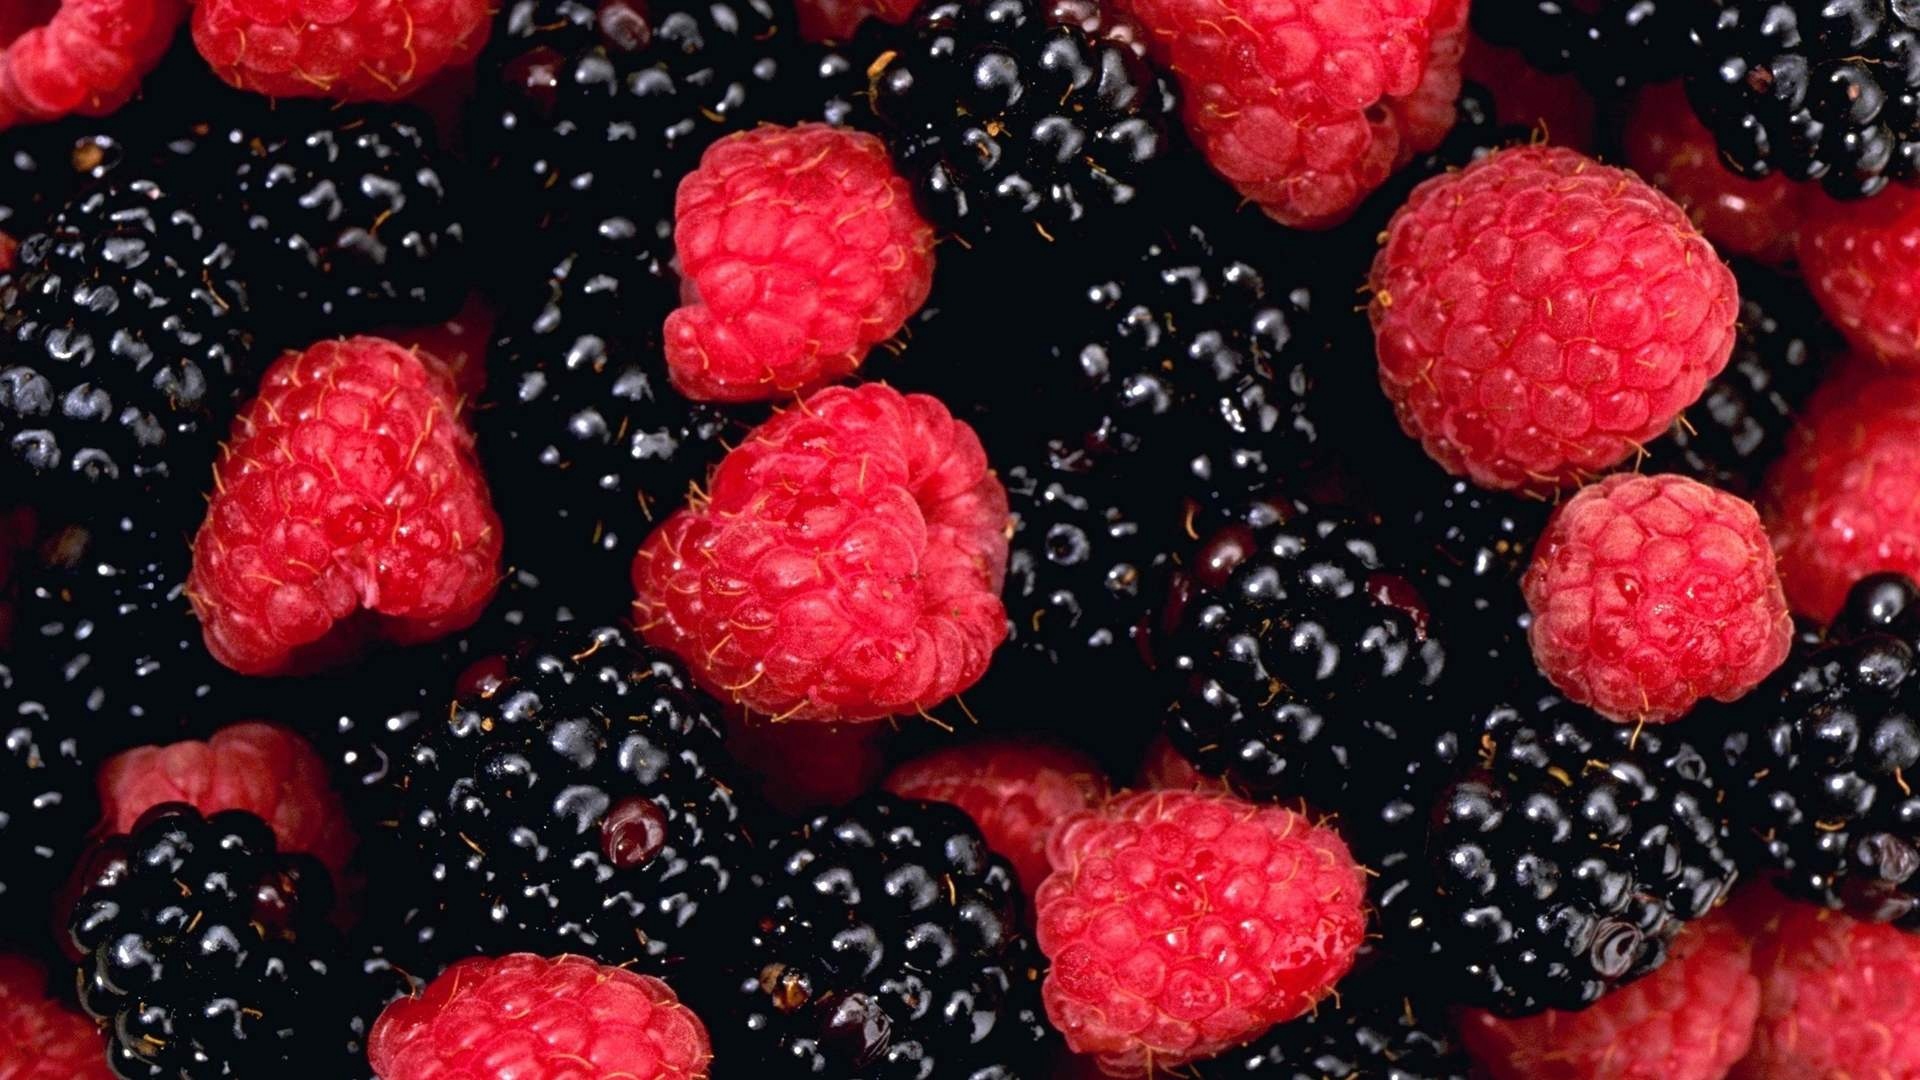 Download wallpaper 1920x1080 raspberries, blackberries, berries ...